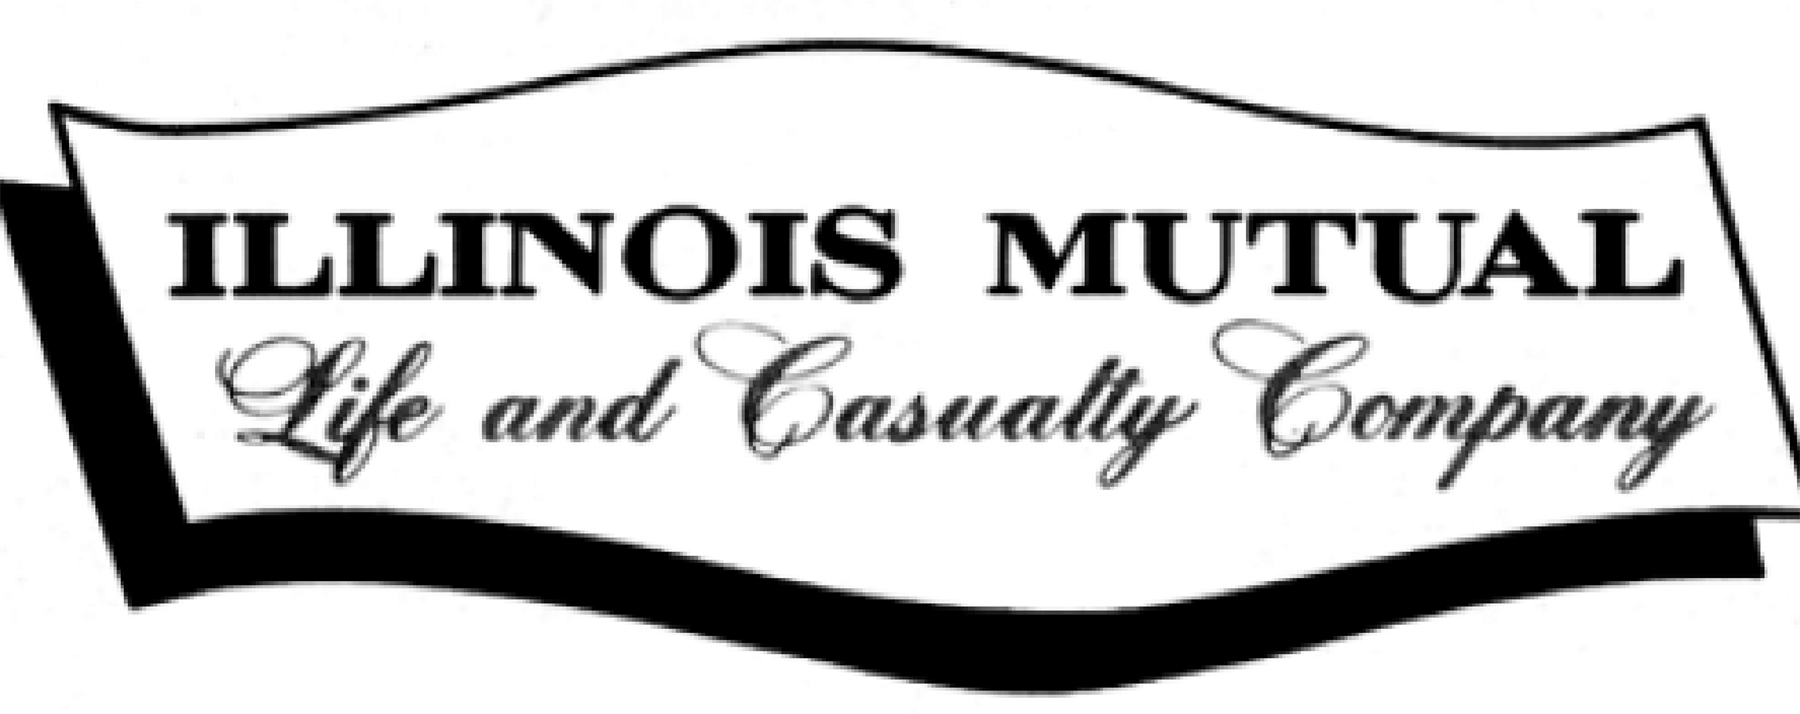 Illinois Mutual Life and Casualty Company logo.